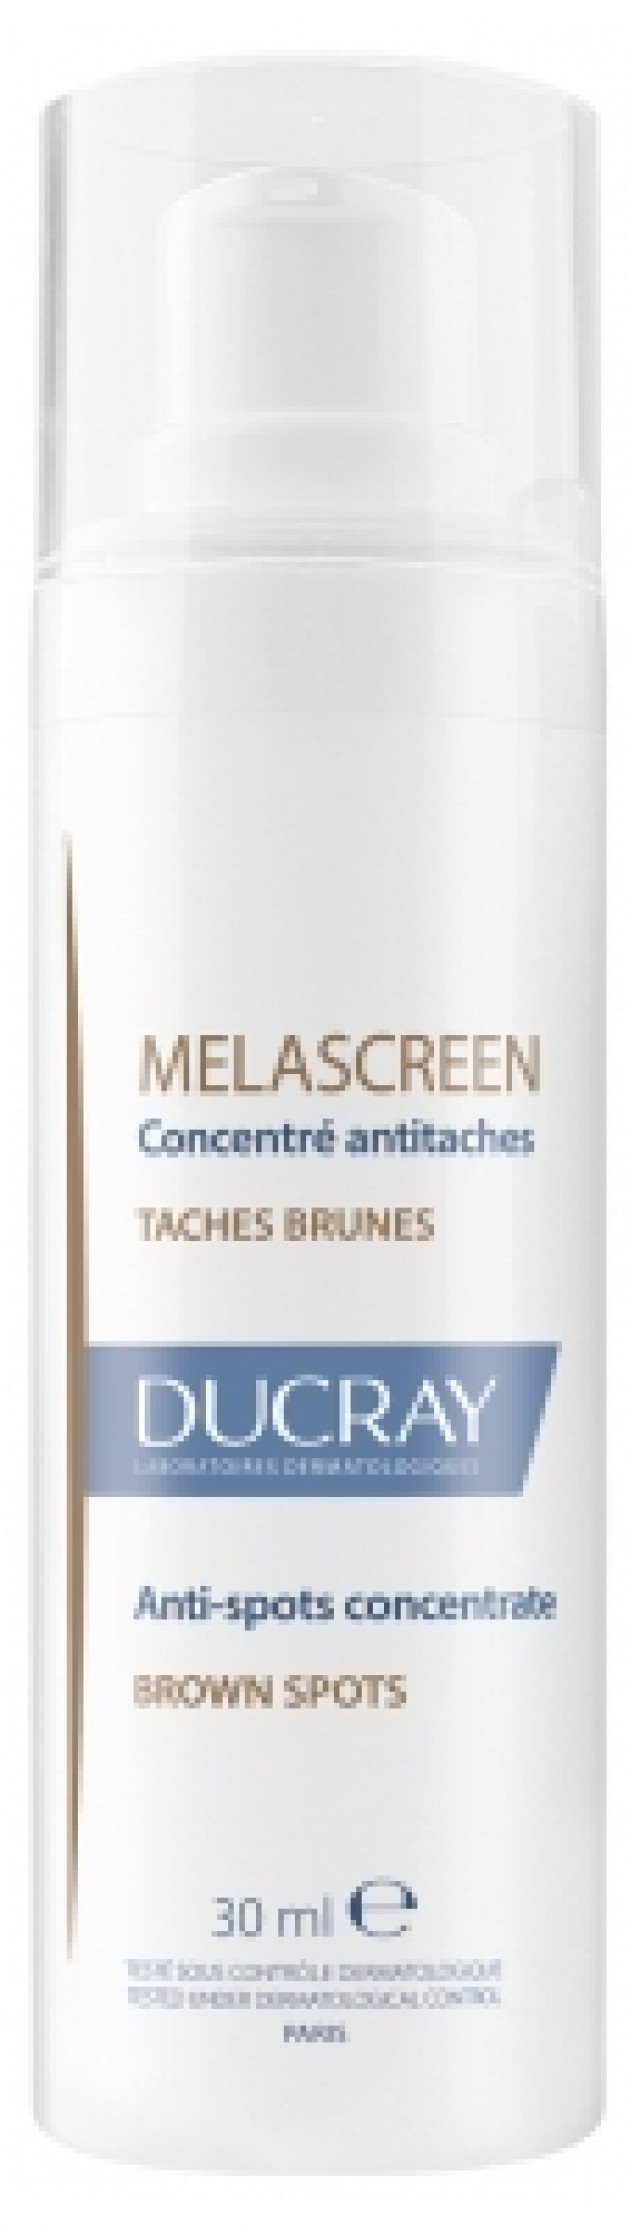 Ducray Melascreen Soin Concentre Antitaches για τις Κηλίδες, 30ml